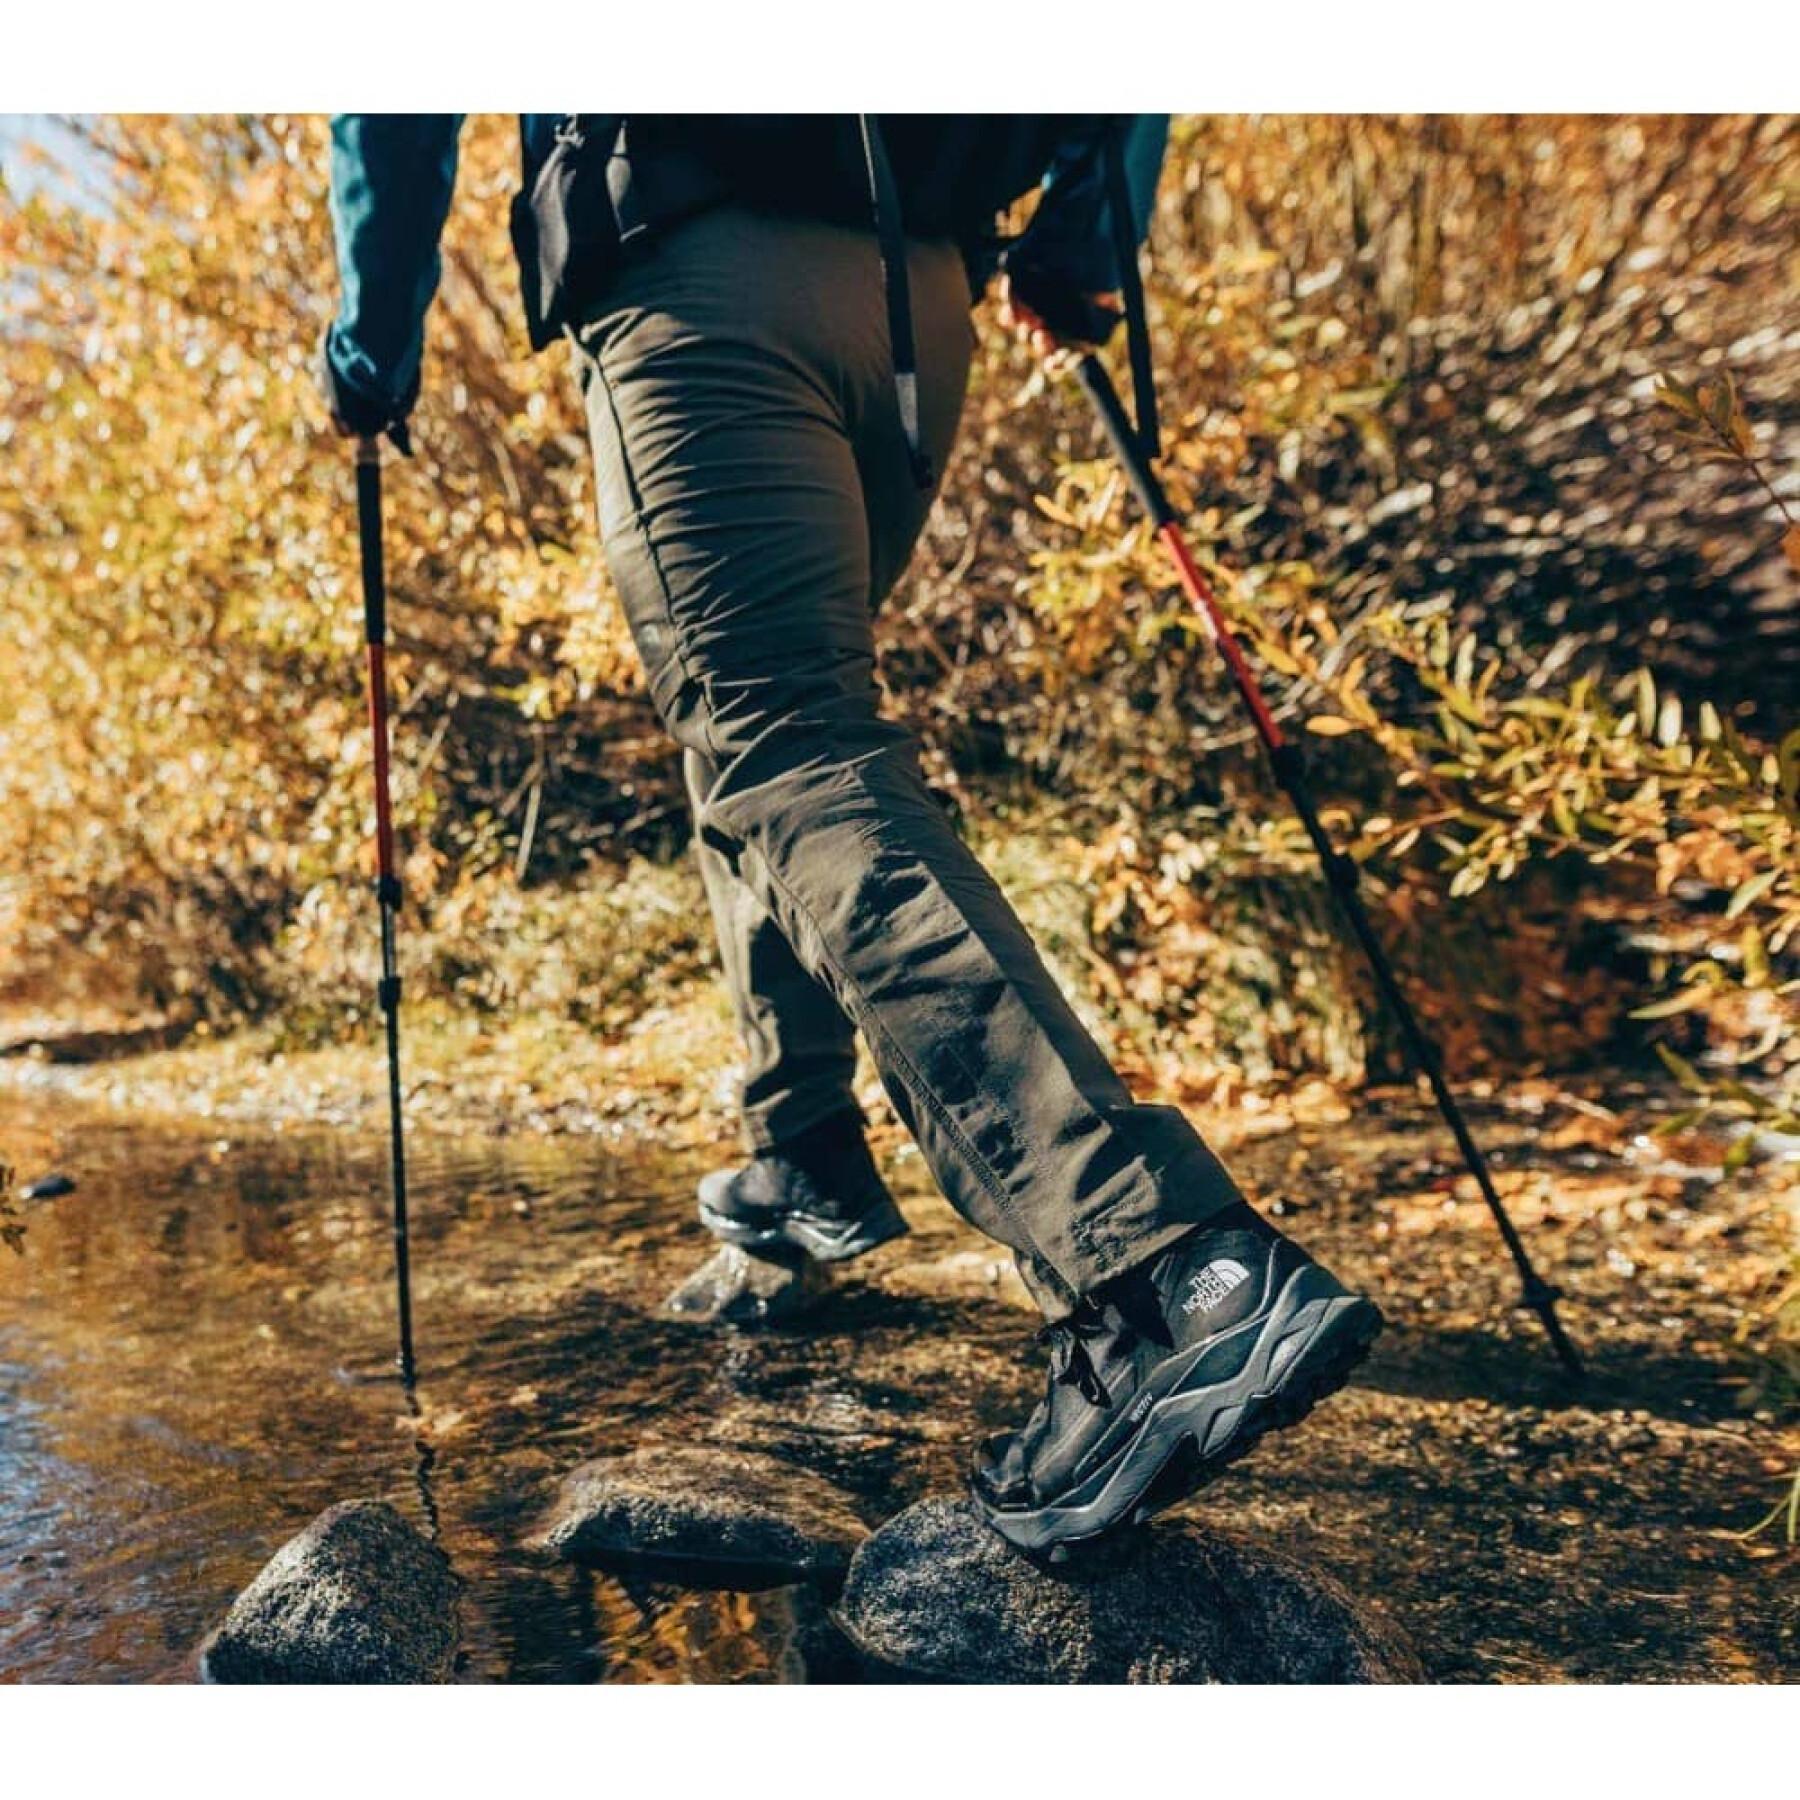 Hiking shoes The North Face Vectiv exploris mid futurelight™